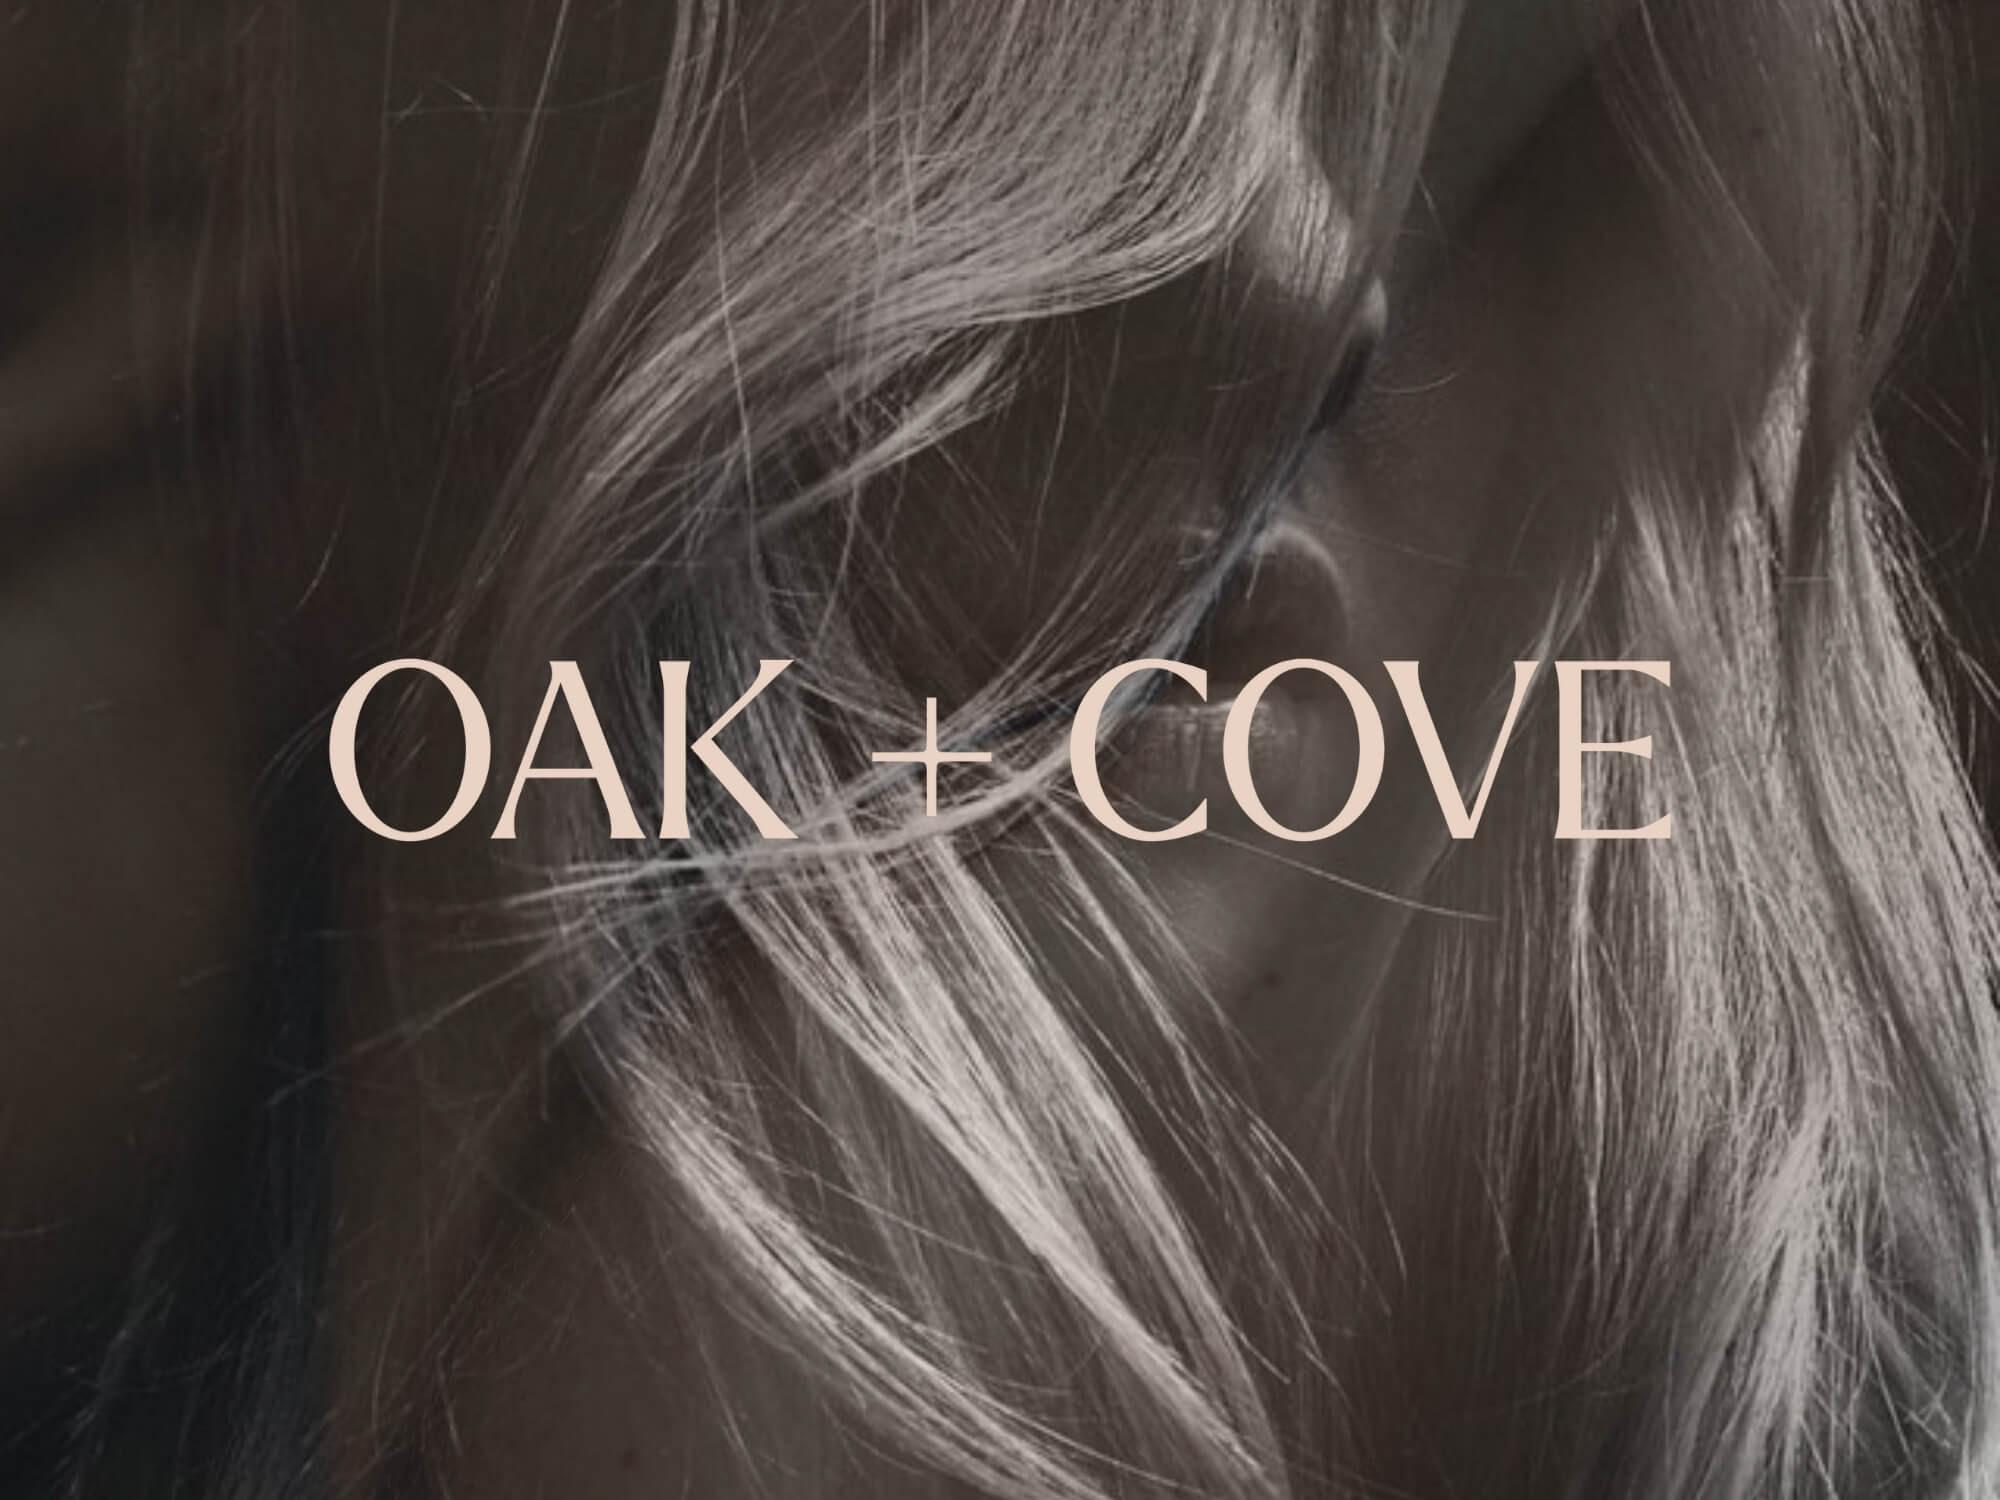 Product: Oak + Cove | Designed by Quixotic Design Co.